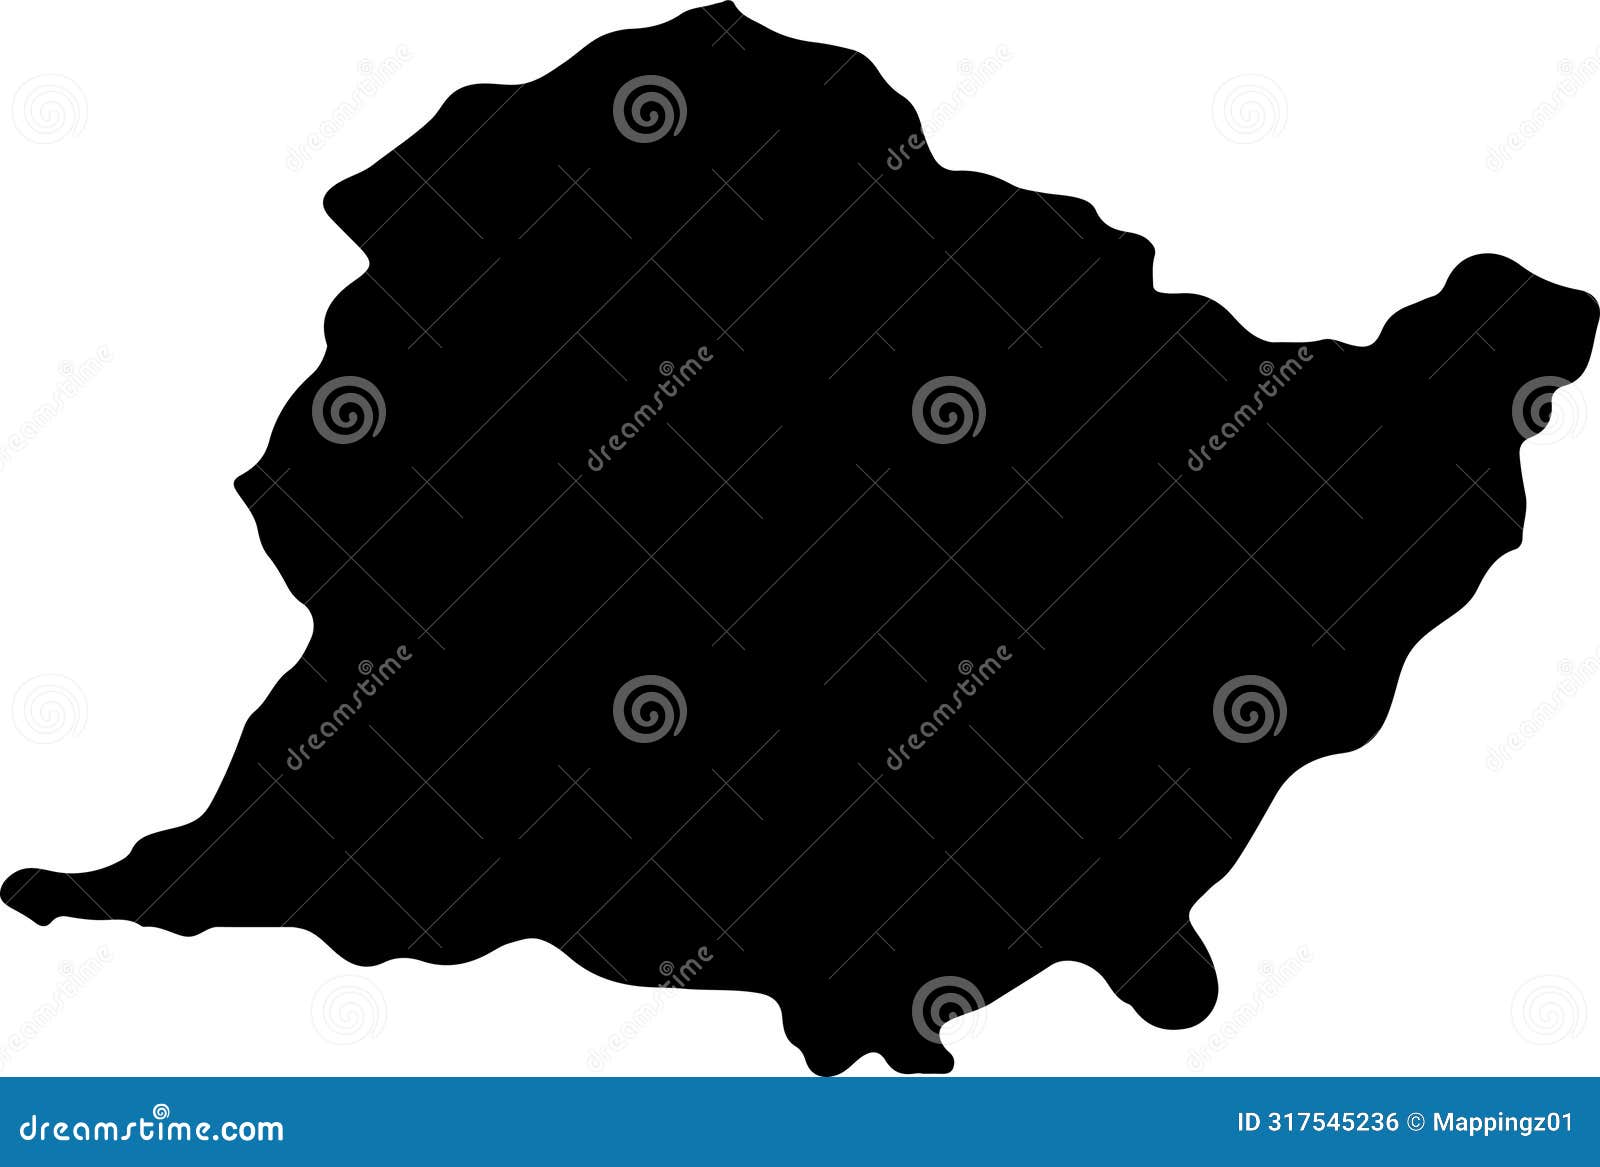 gandaki nepal silhouette map with transparent background